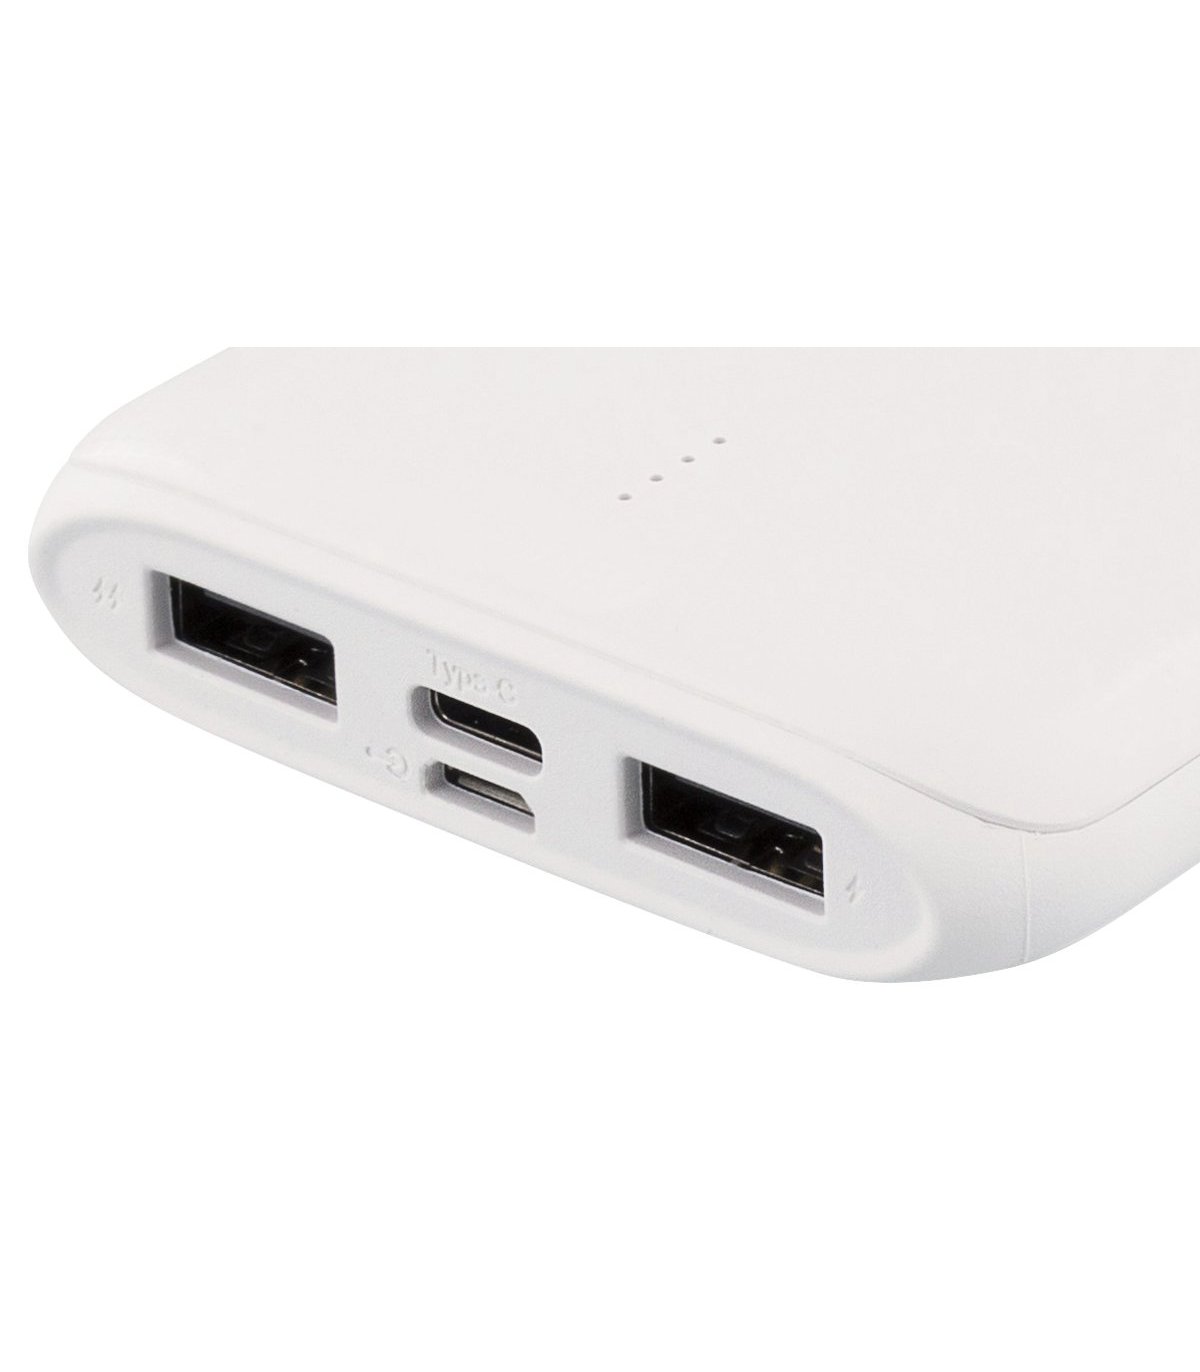 Deltaco 10000mAh Dual USB PowerBank, USB-C port, white